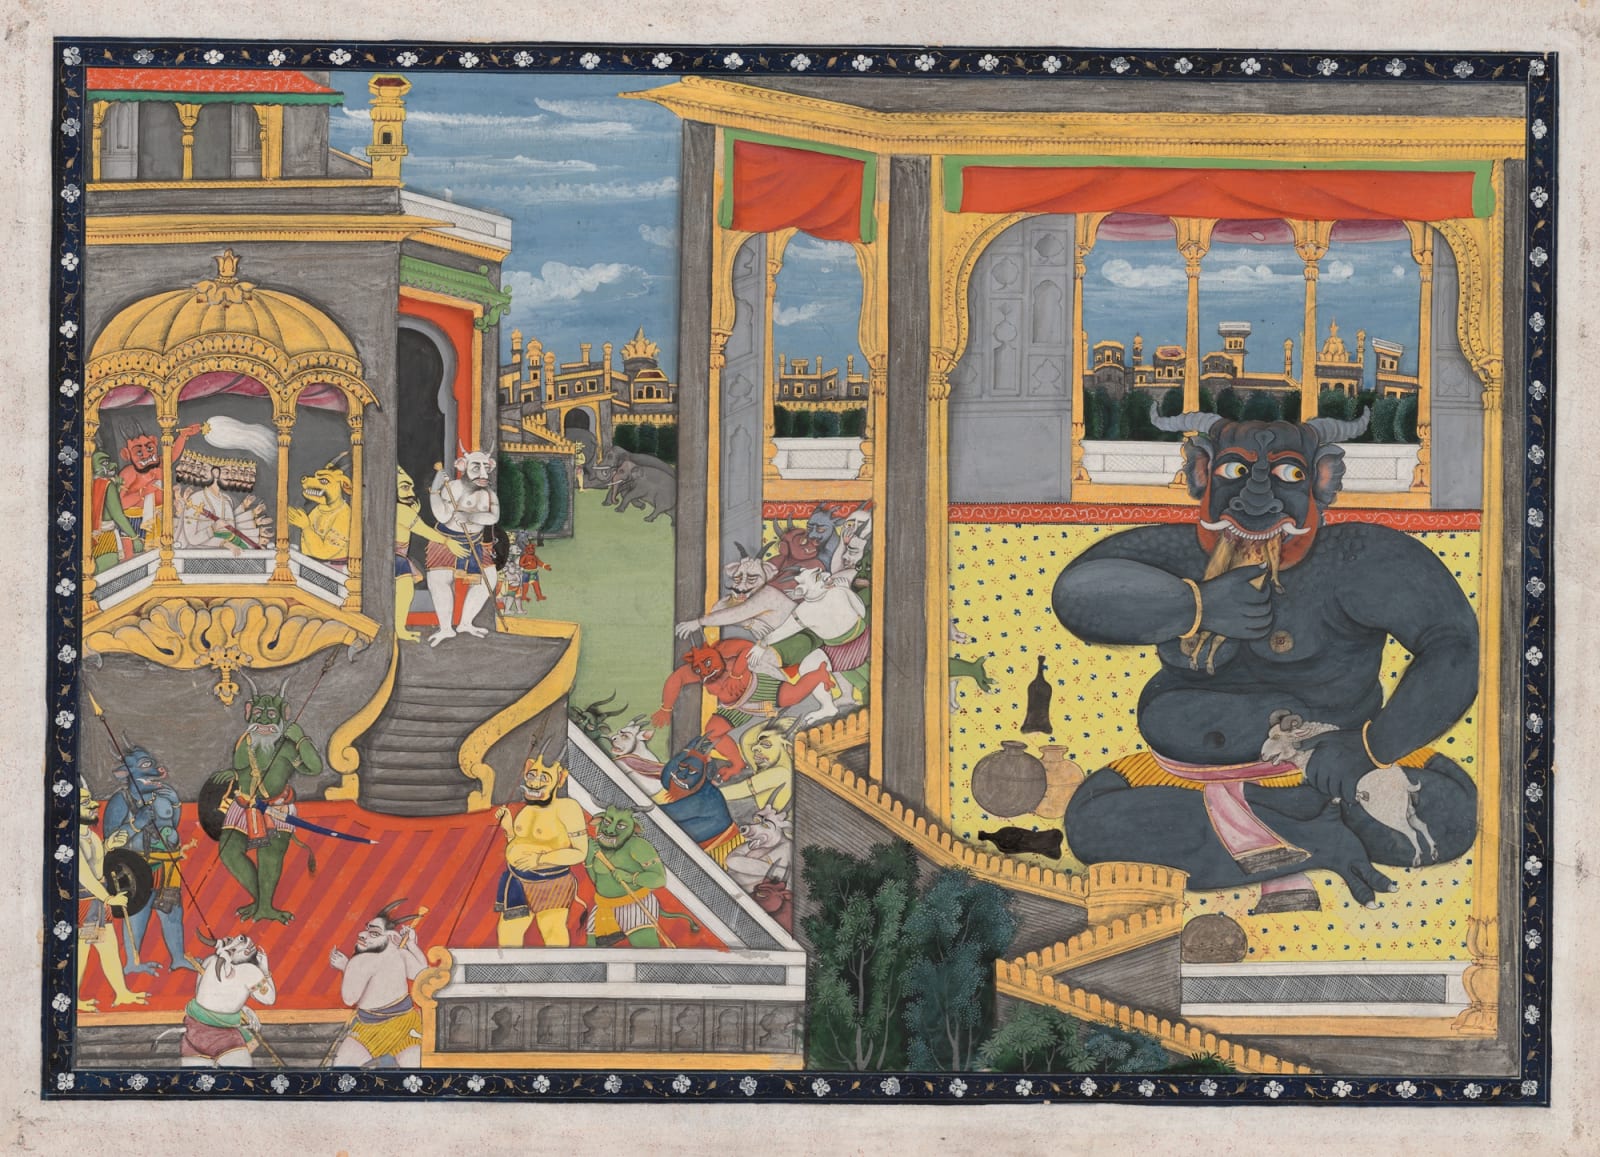 The Giant Kumbhakarna is awakened – A Leaf from the Ramayana, Pahari, mid-19th century